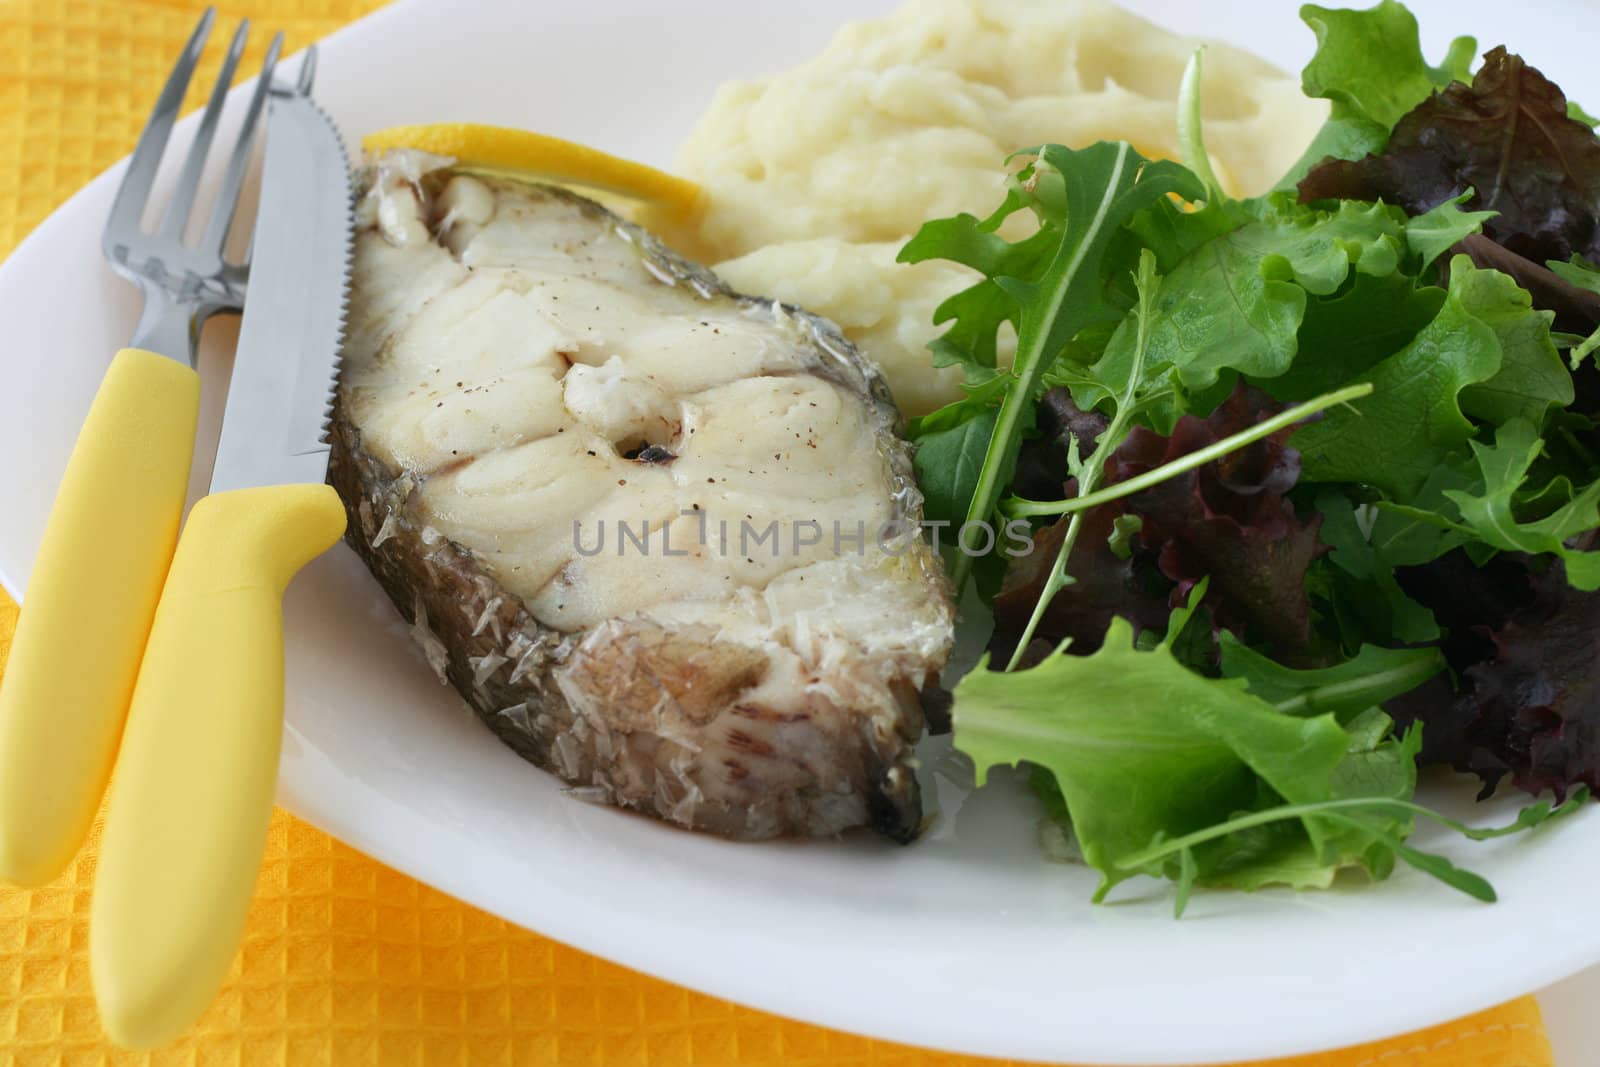 boiled fish with mashed potato by nataliamylova